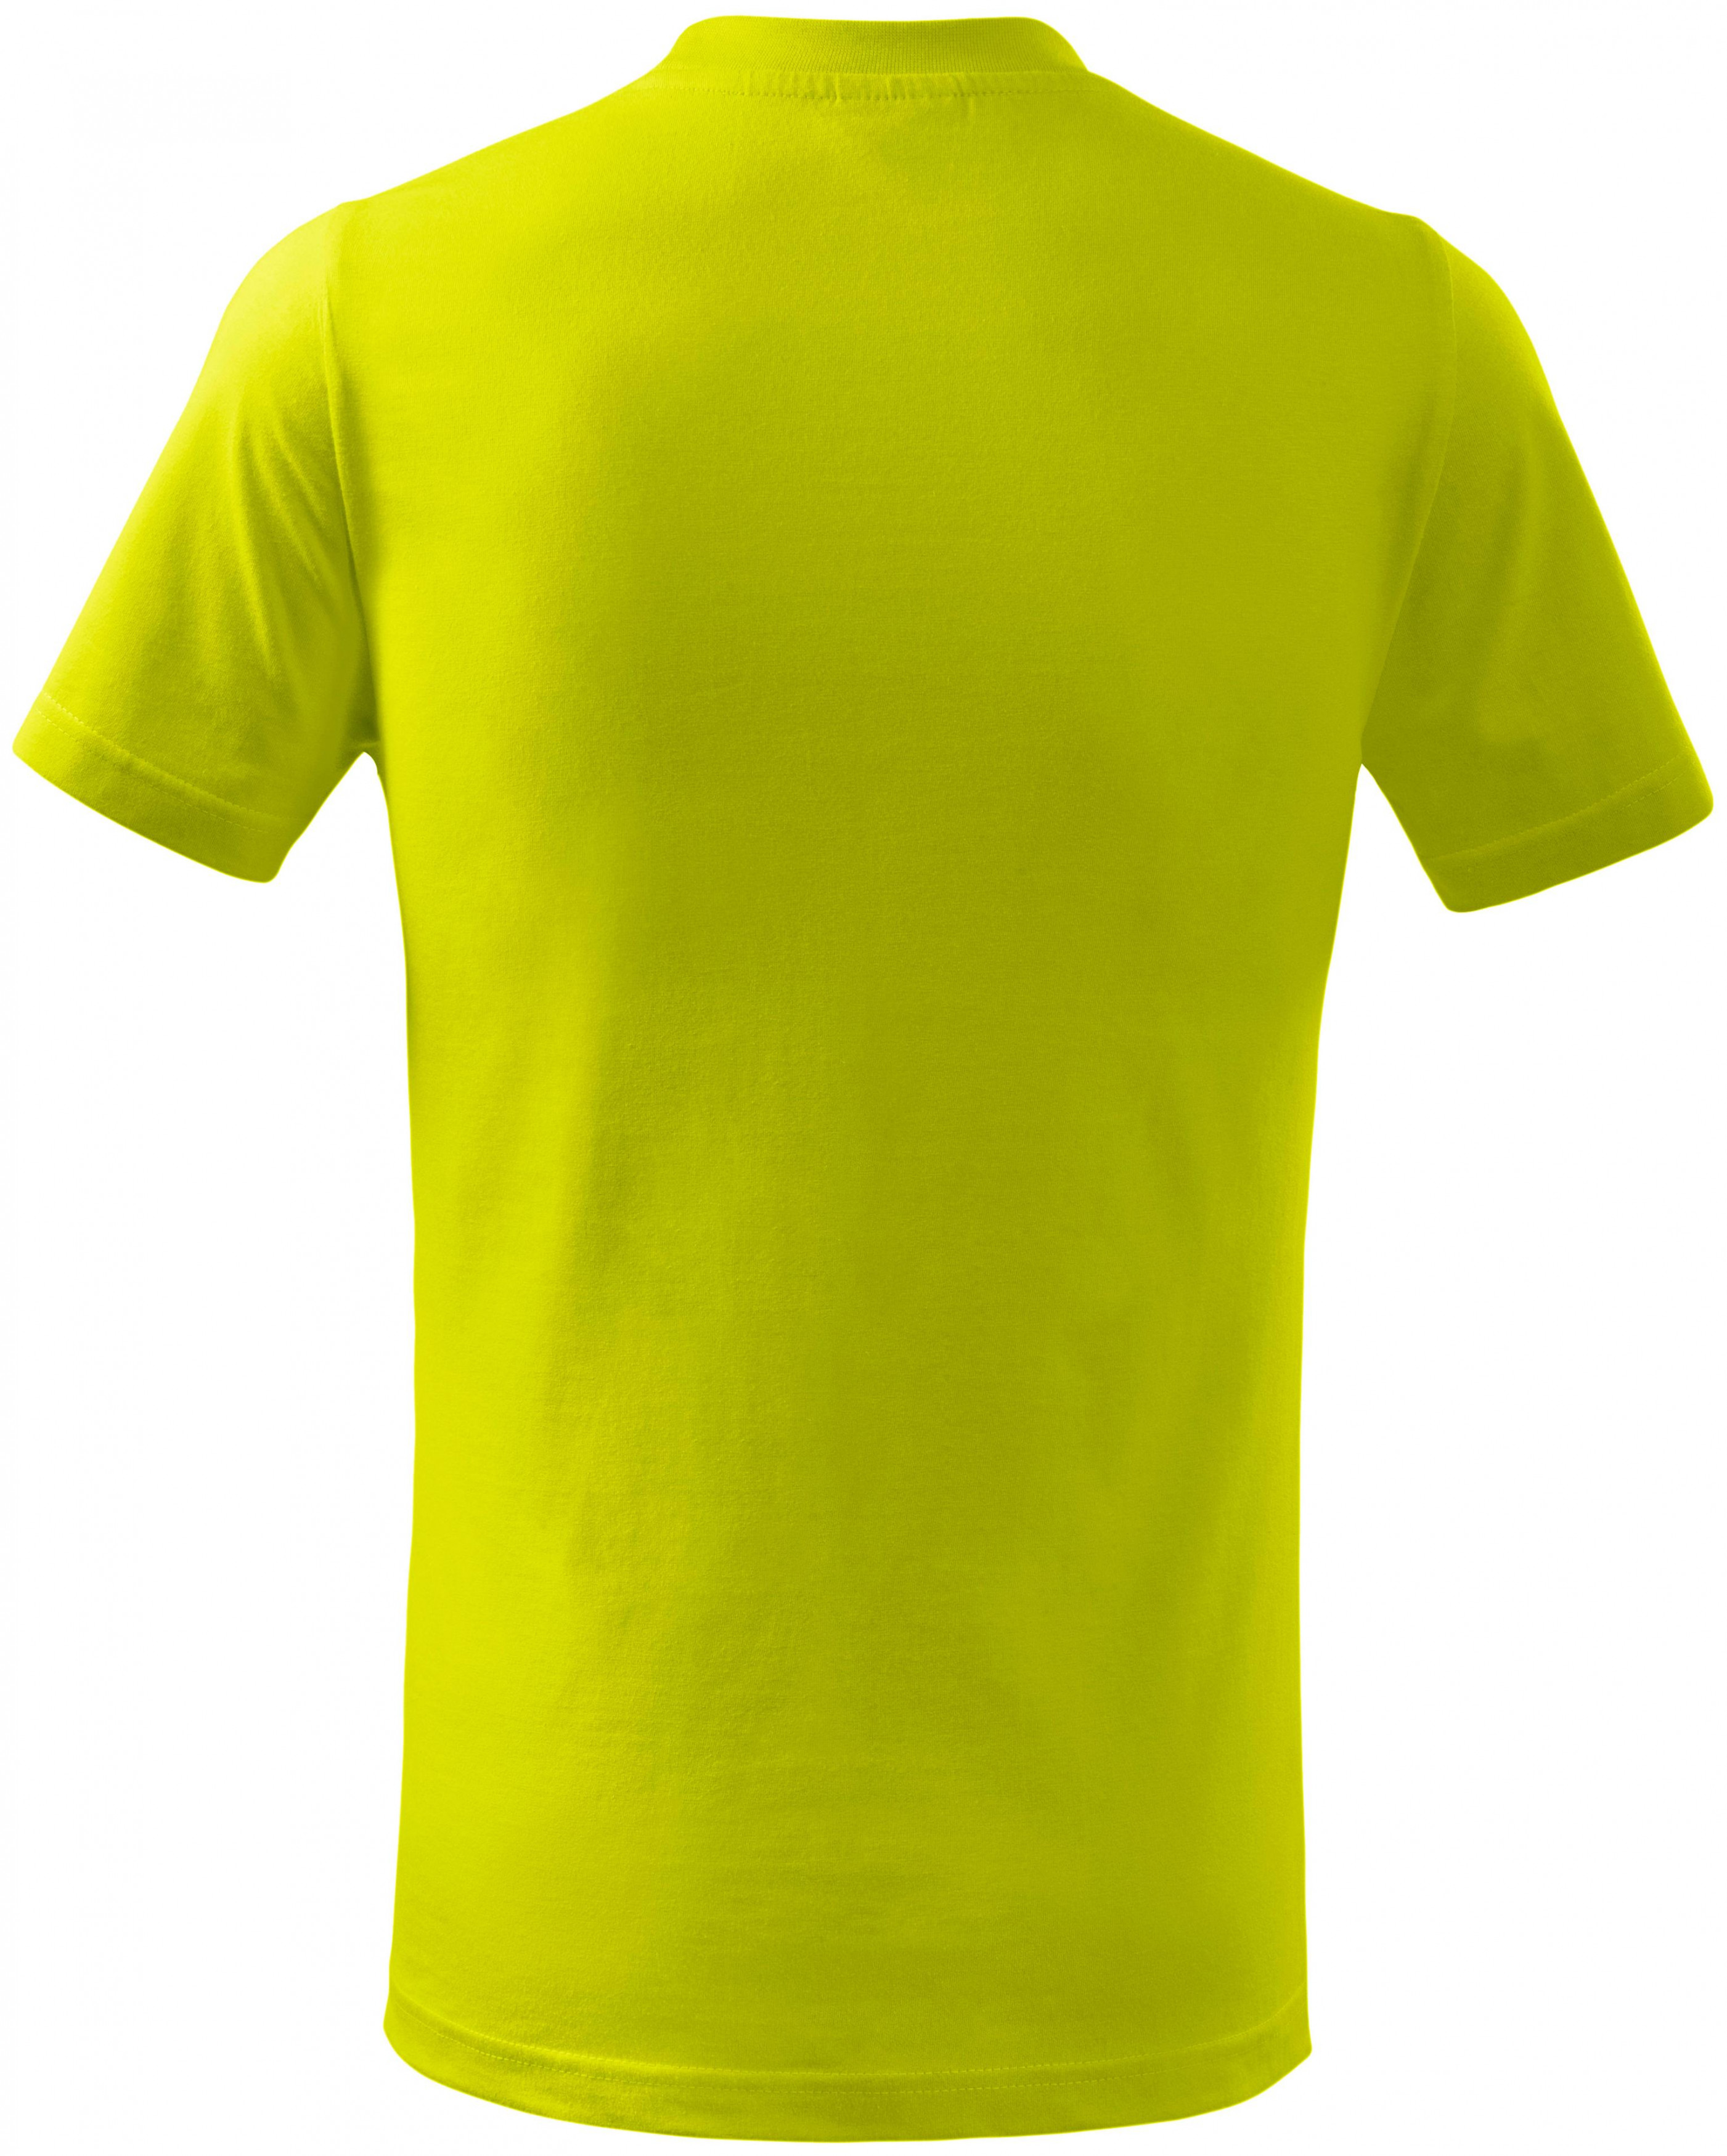 Detské tričko jednoduché, limetková, 110cm / 4roky